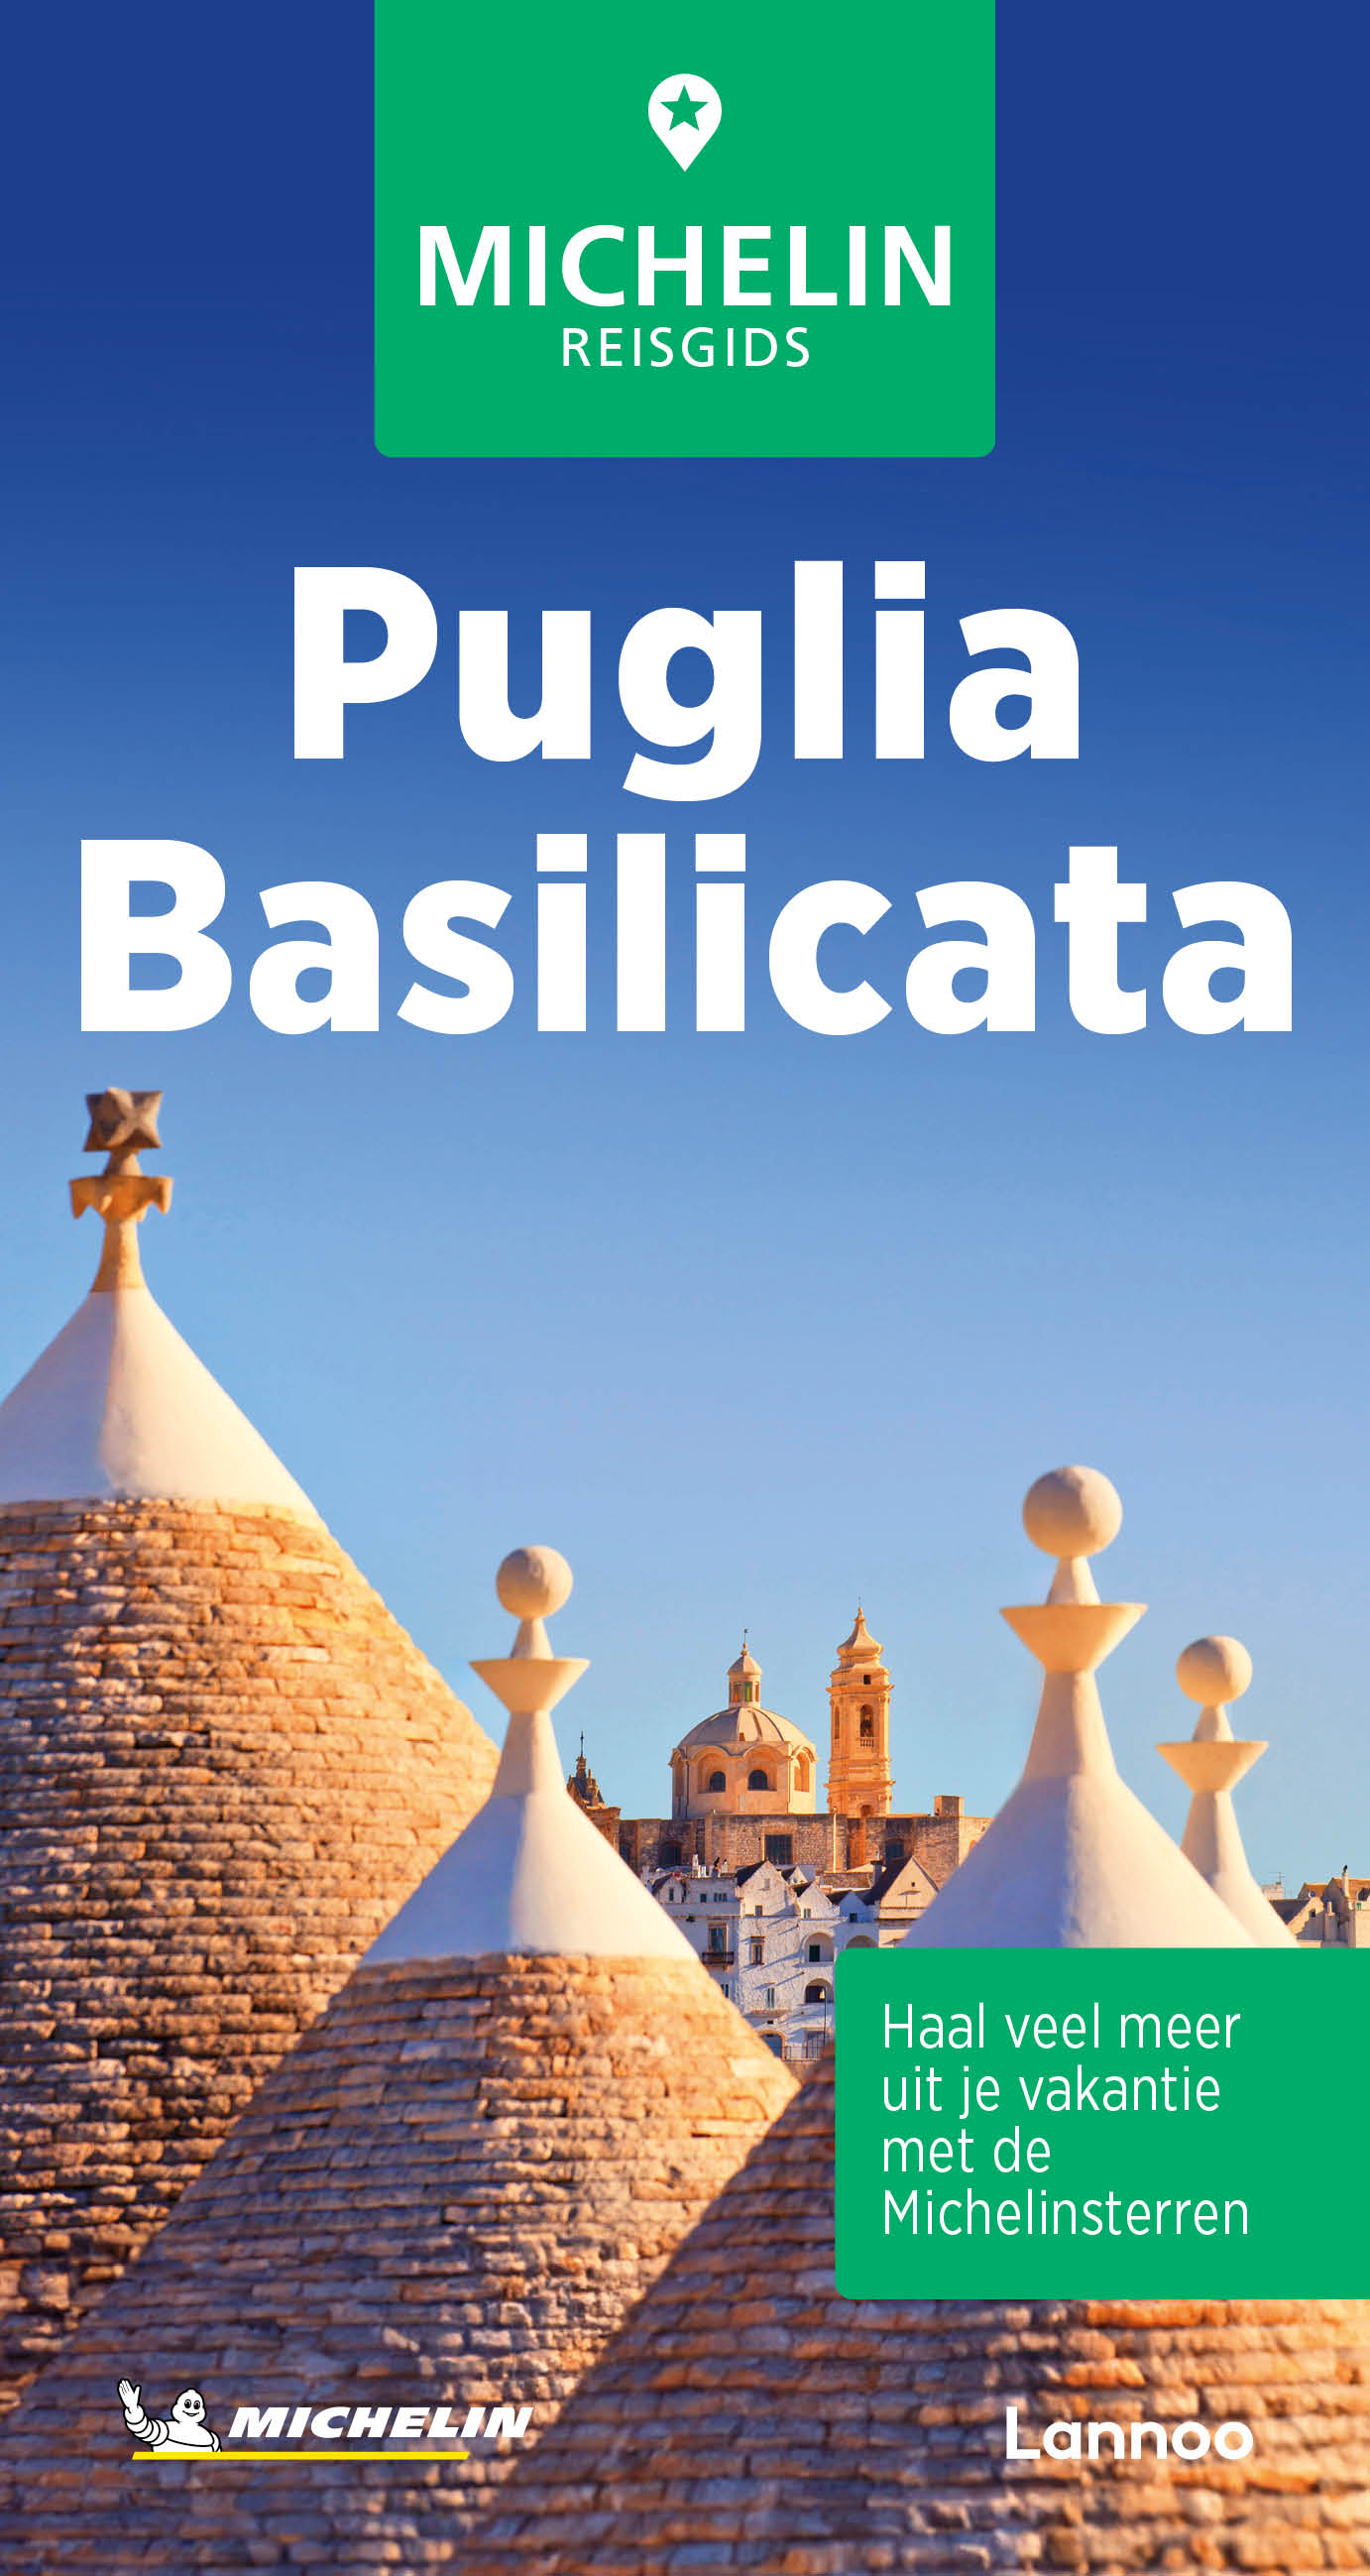 Online bestellen: Reisgids Michelin groene gids Puglia-Matera-Basilicata | Lannoo